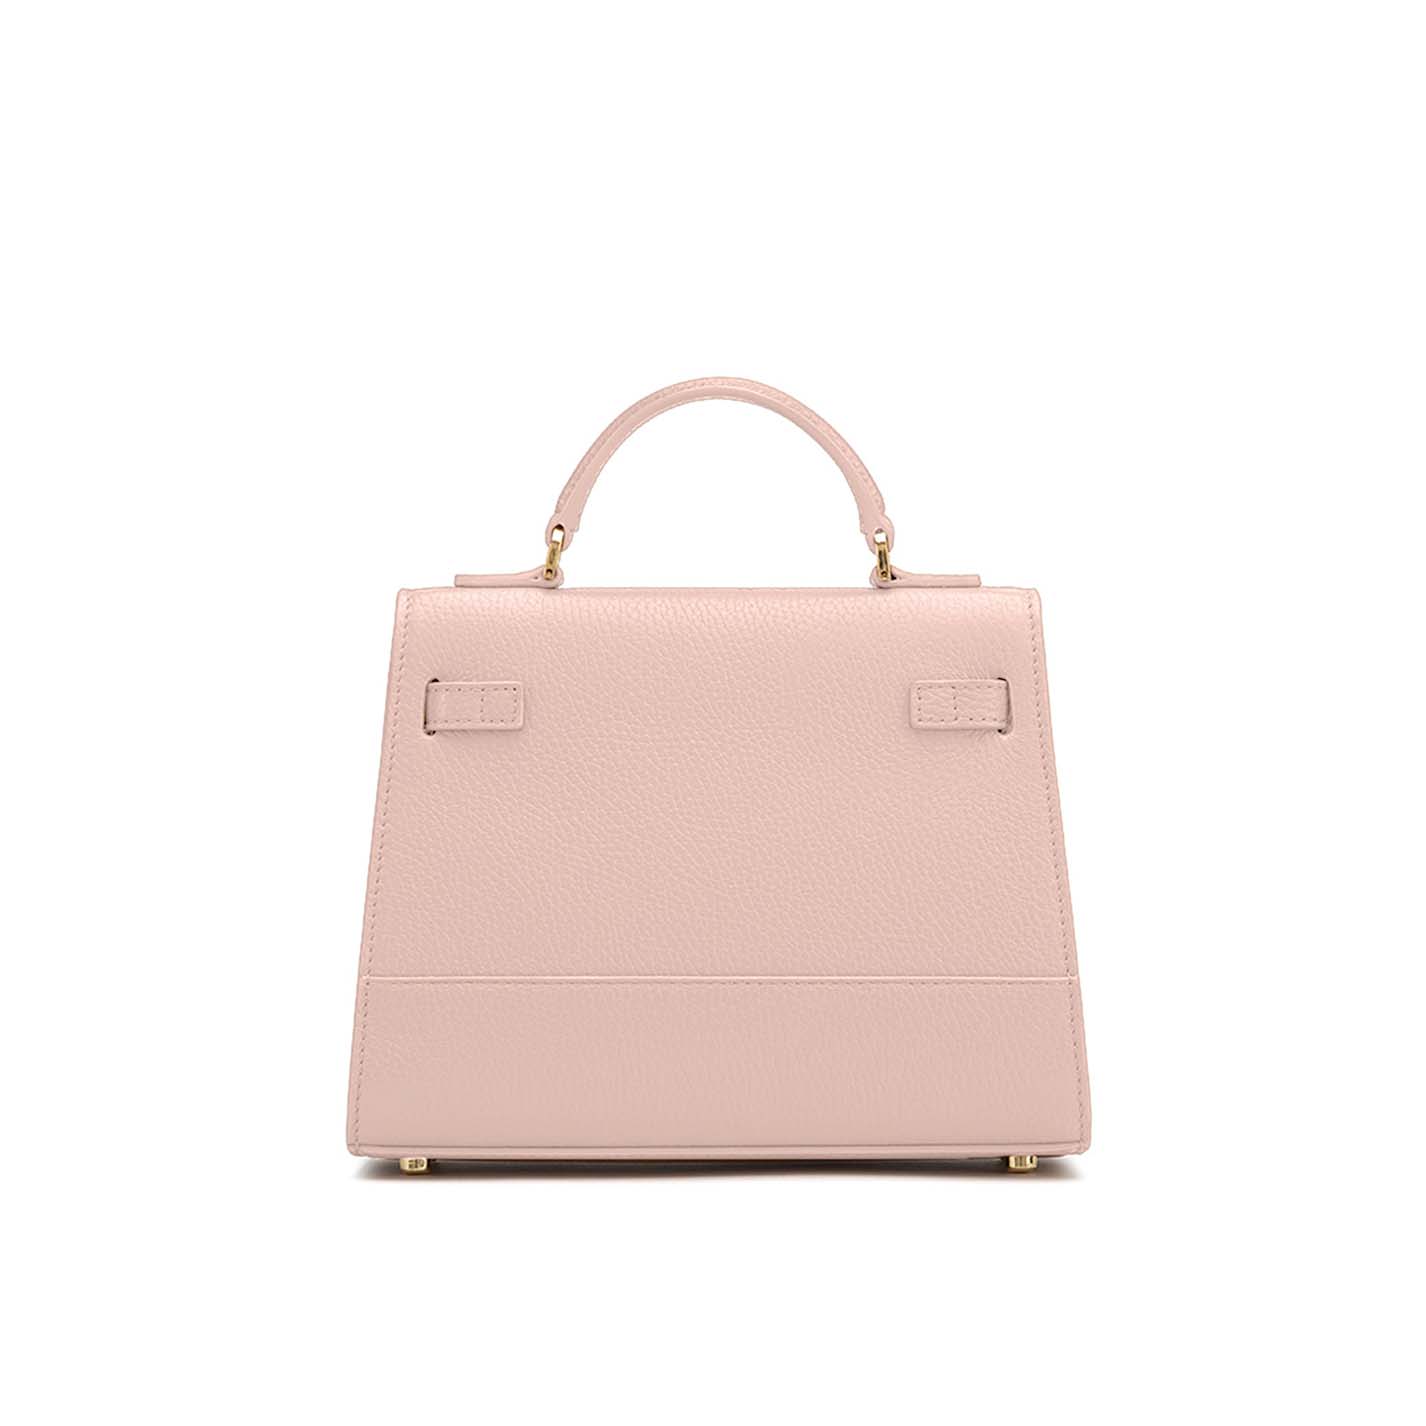 kim-stampatto-9-pink-leather-bag-back